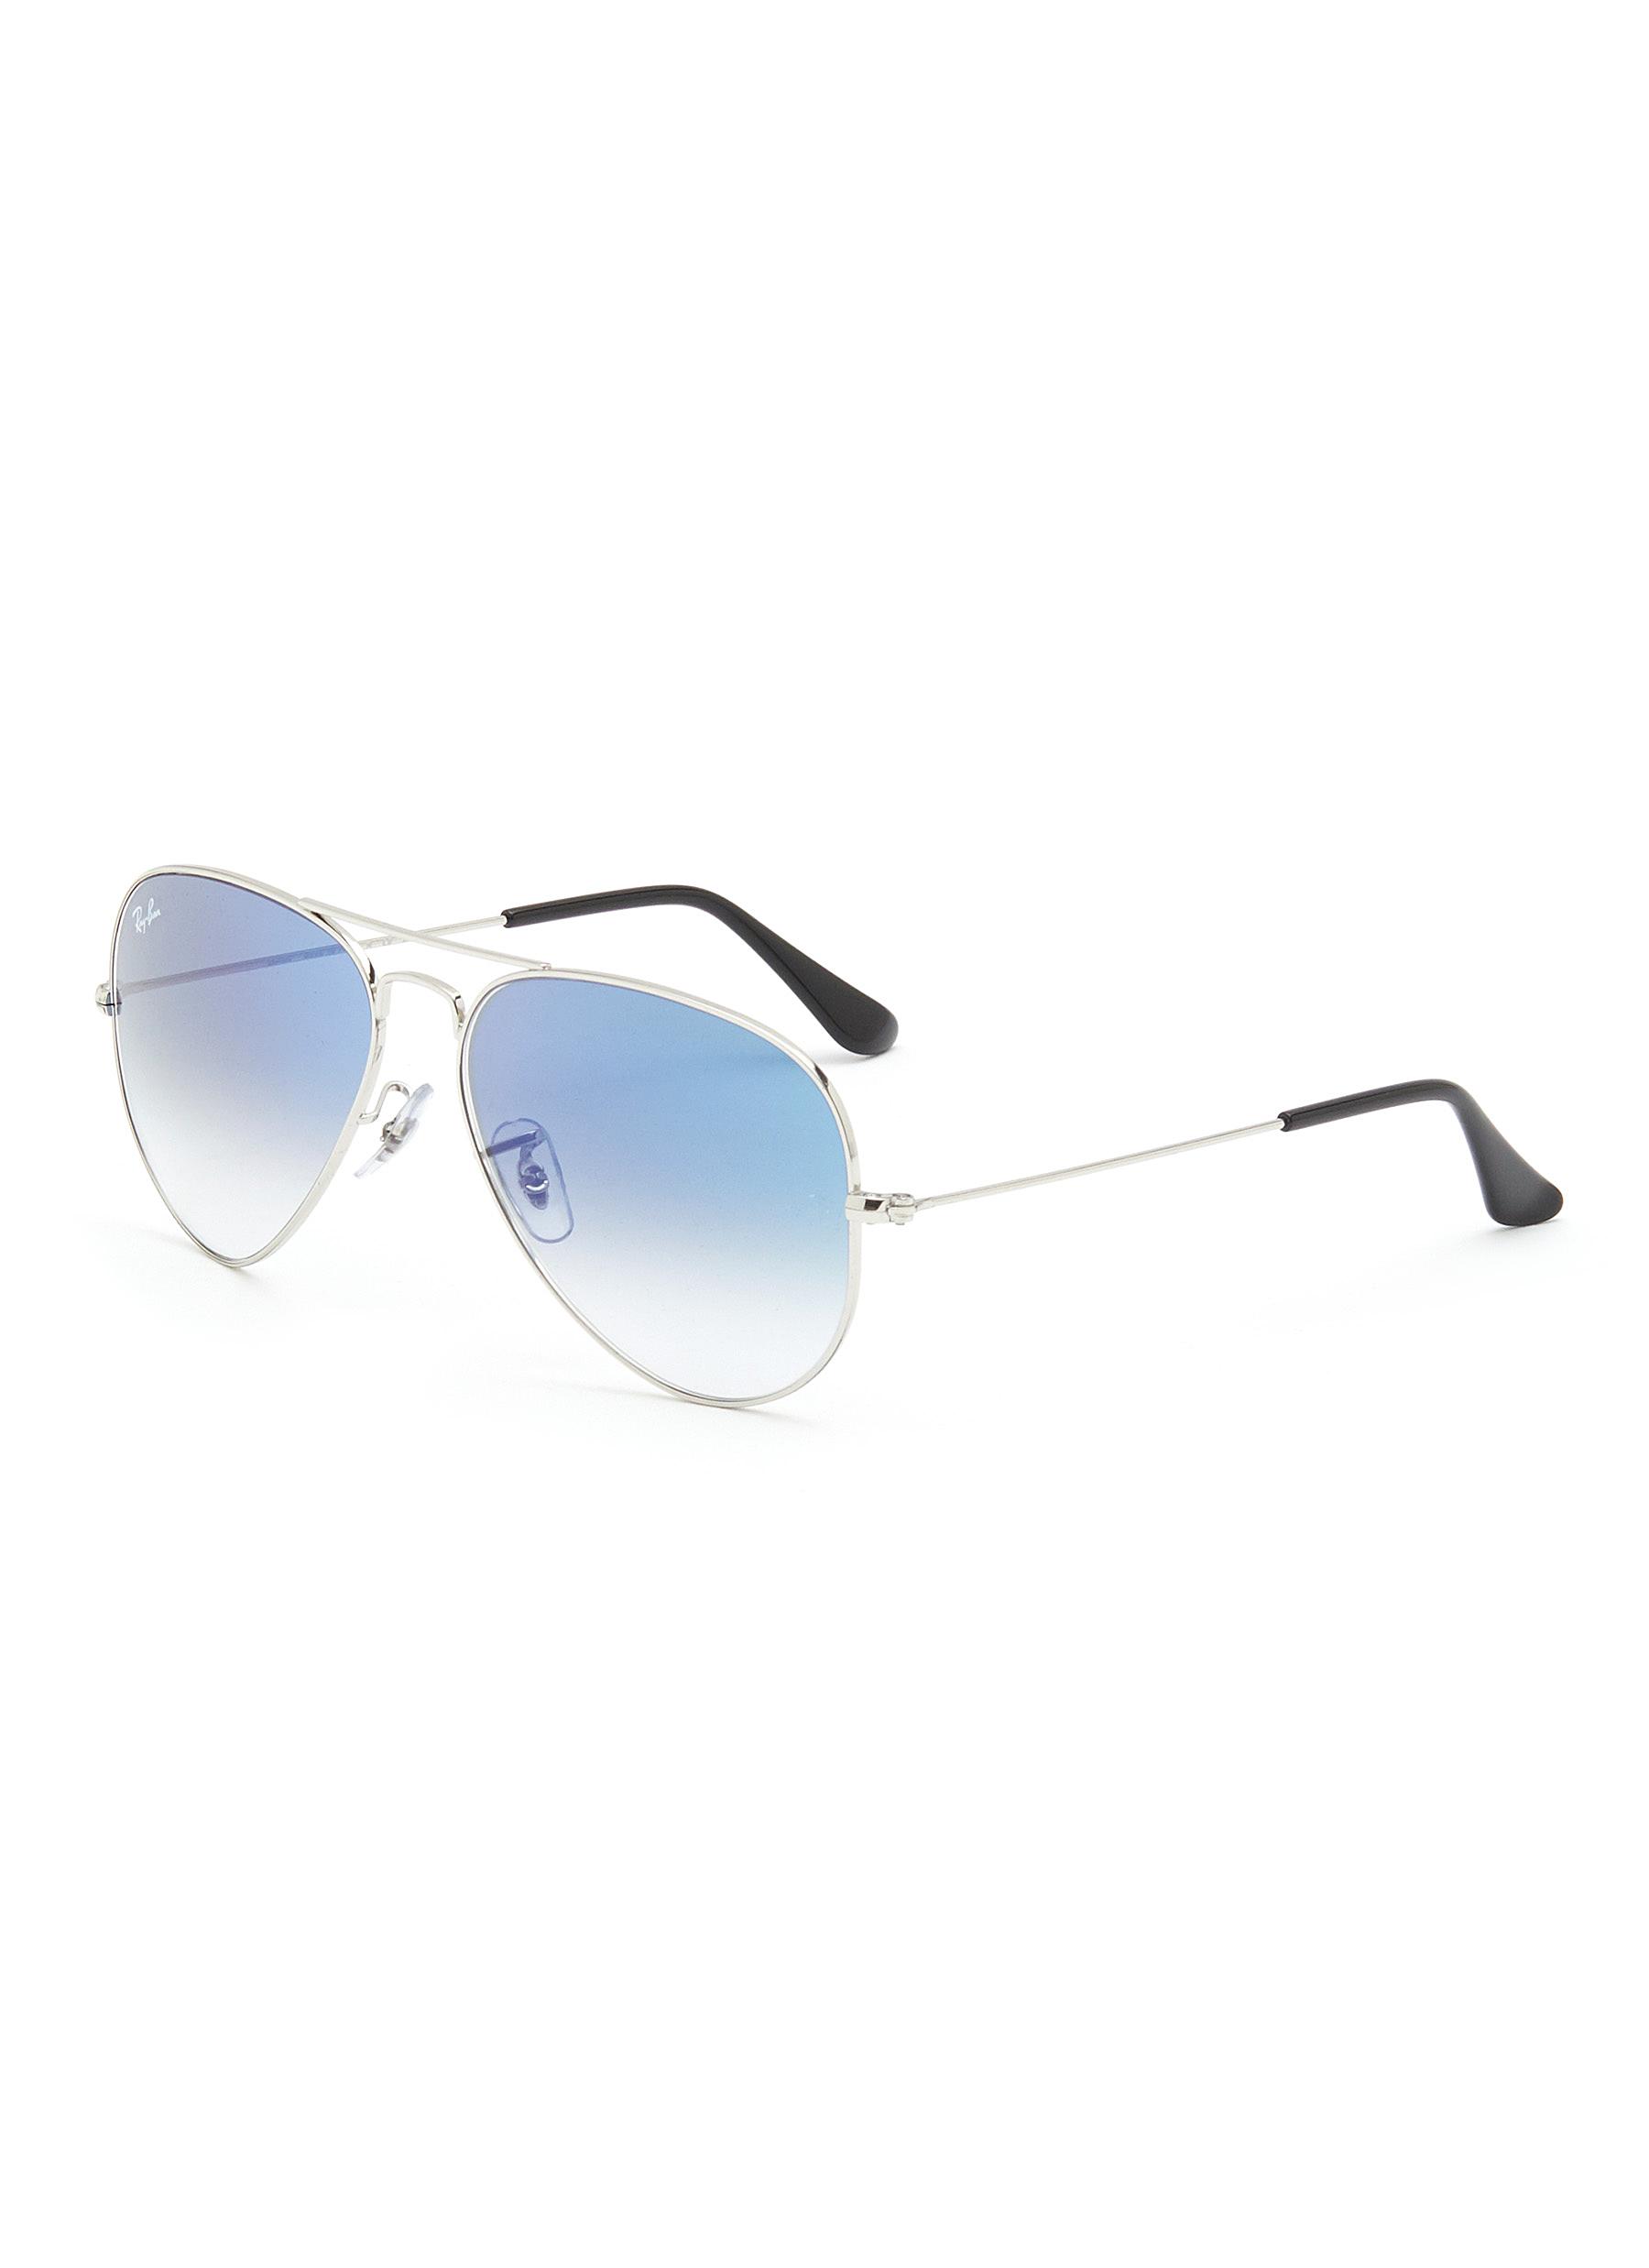 Gradient Blue Lens Silver Toned Metal Aviator Sunglasses